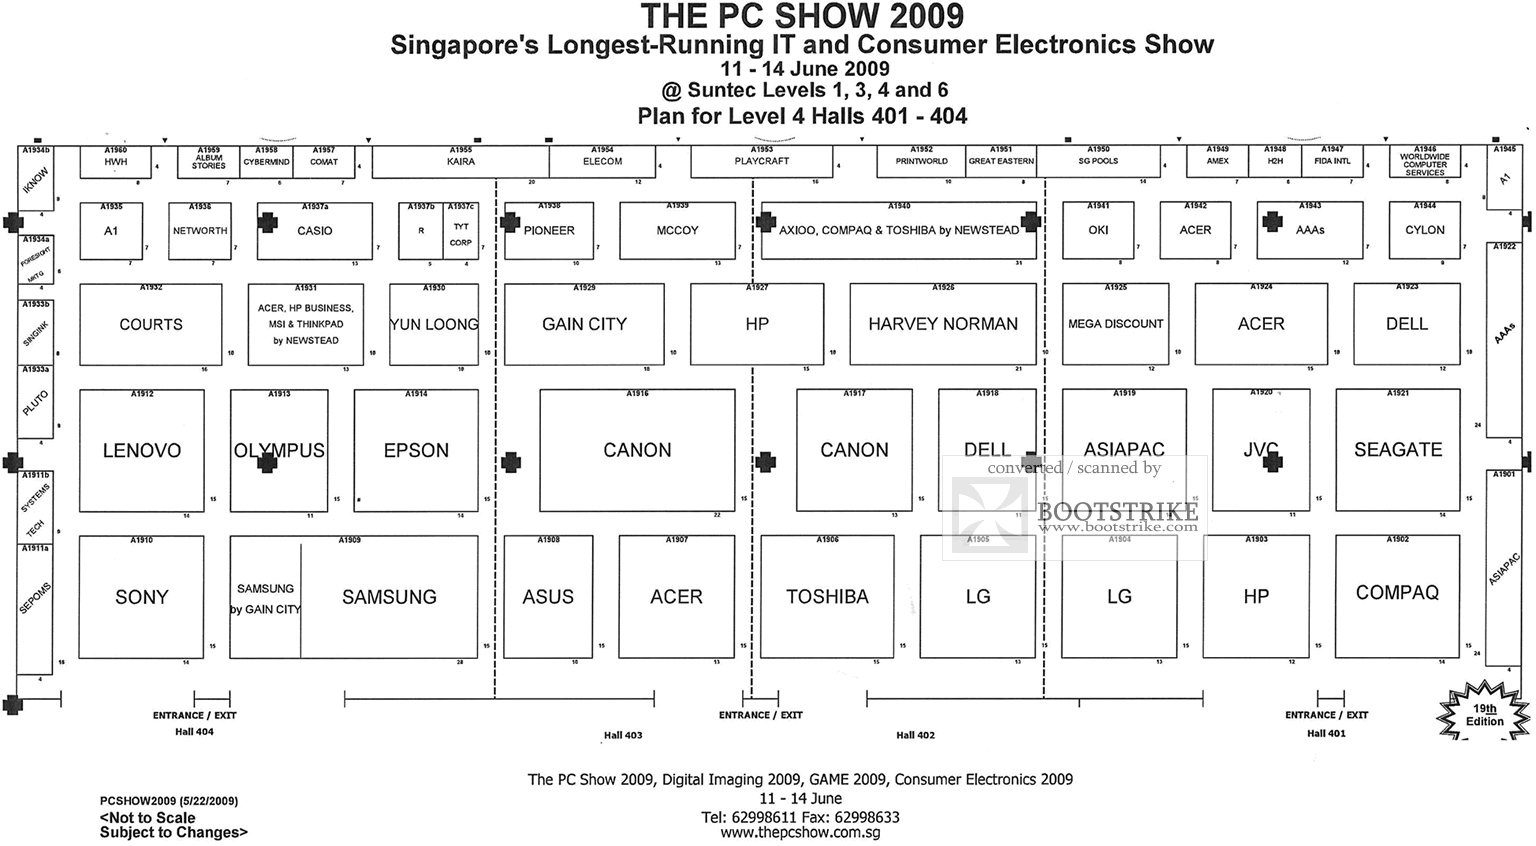 PC Show 2009 price list image brochure of Floor Plan Map Level 4